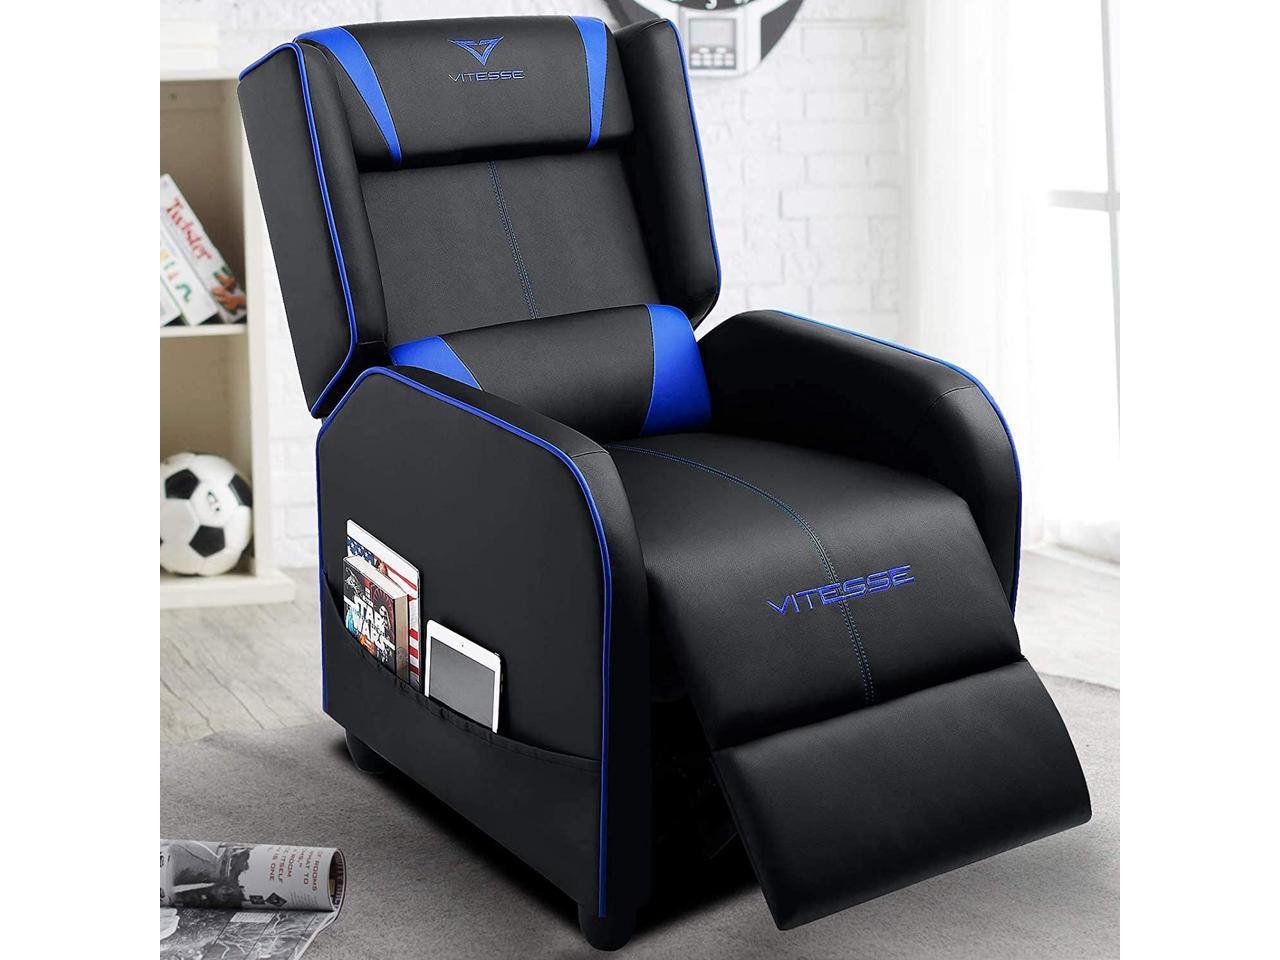 Obedient Soft feet Converge Vitesse Gaming Recliner Chair Ergonomic Racing Style - Blue - Newegg.com